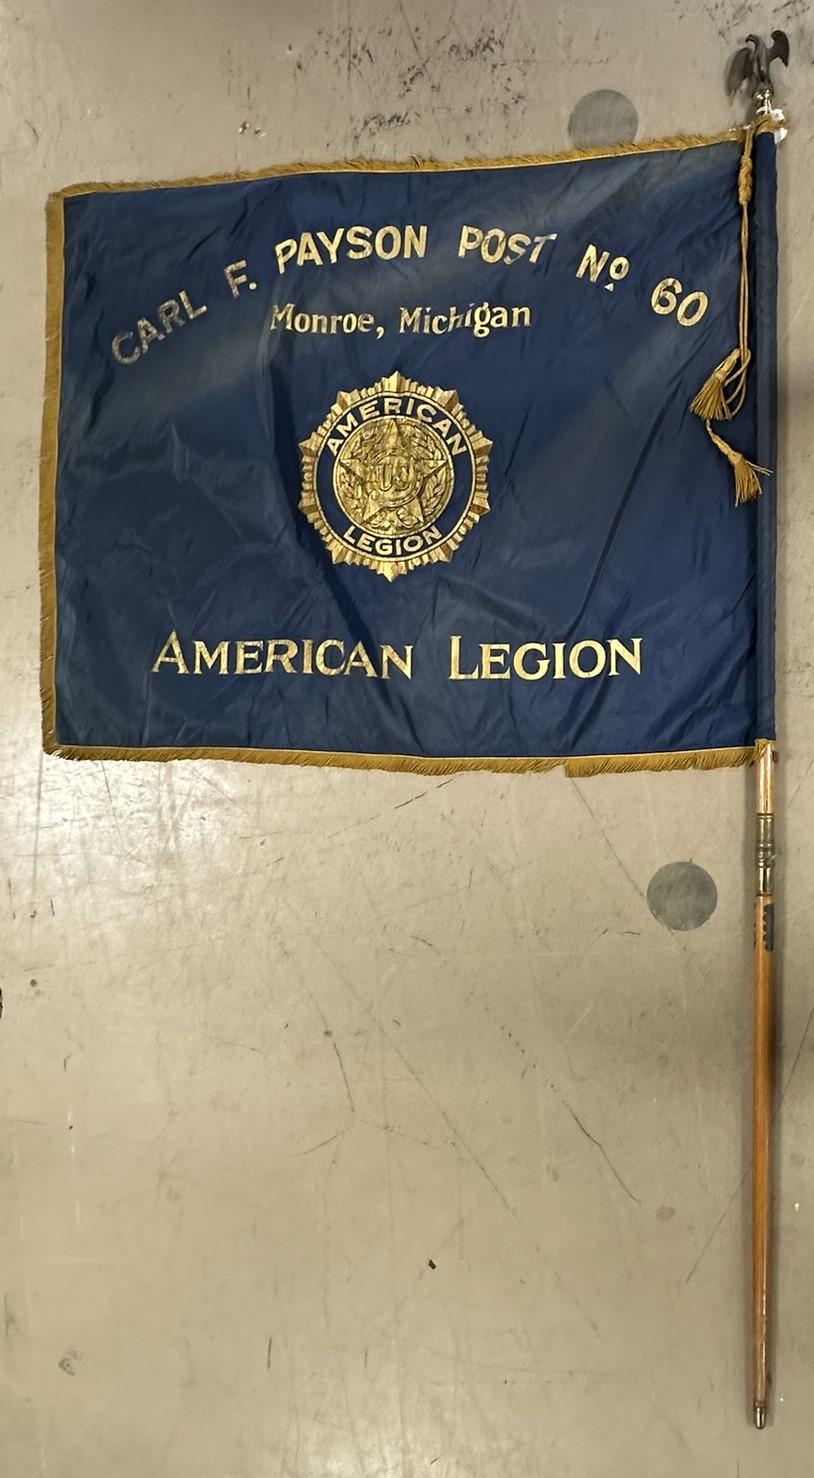 American Legion Monroe Michigan 1920s-30s Flag & Staff Carl R Payson Post No 60